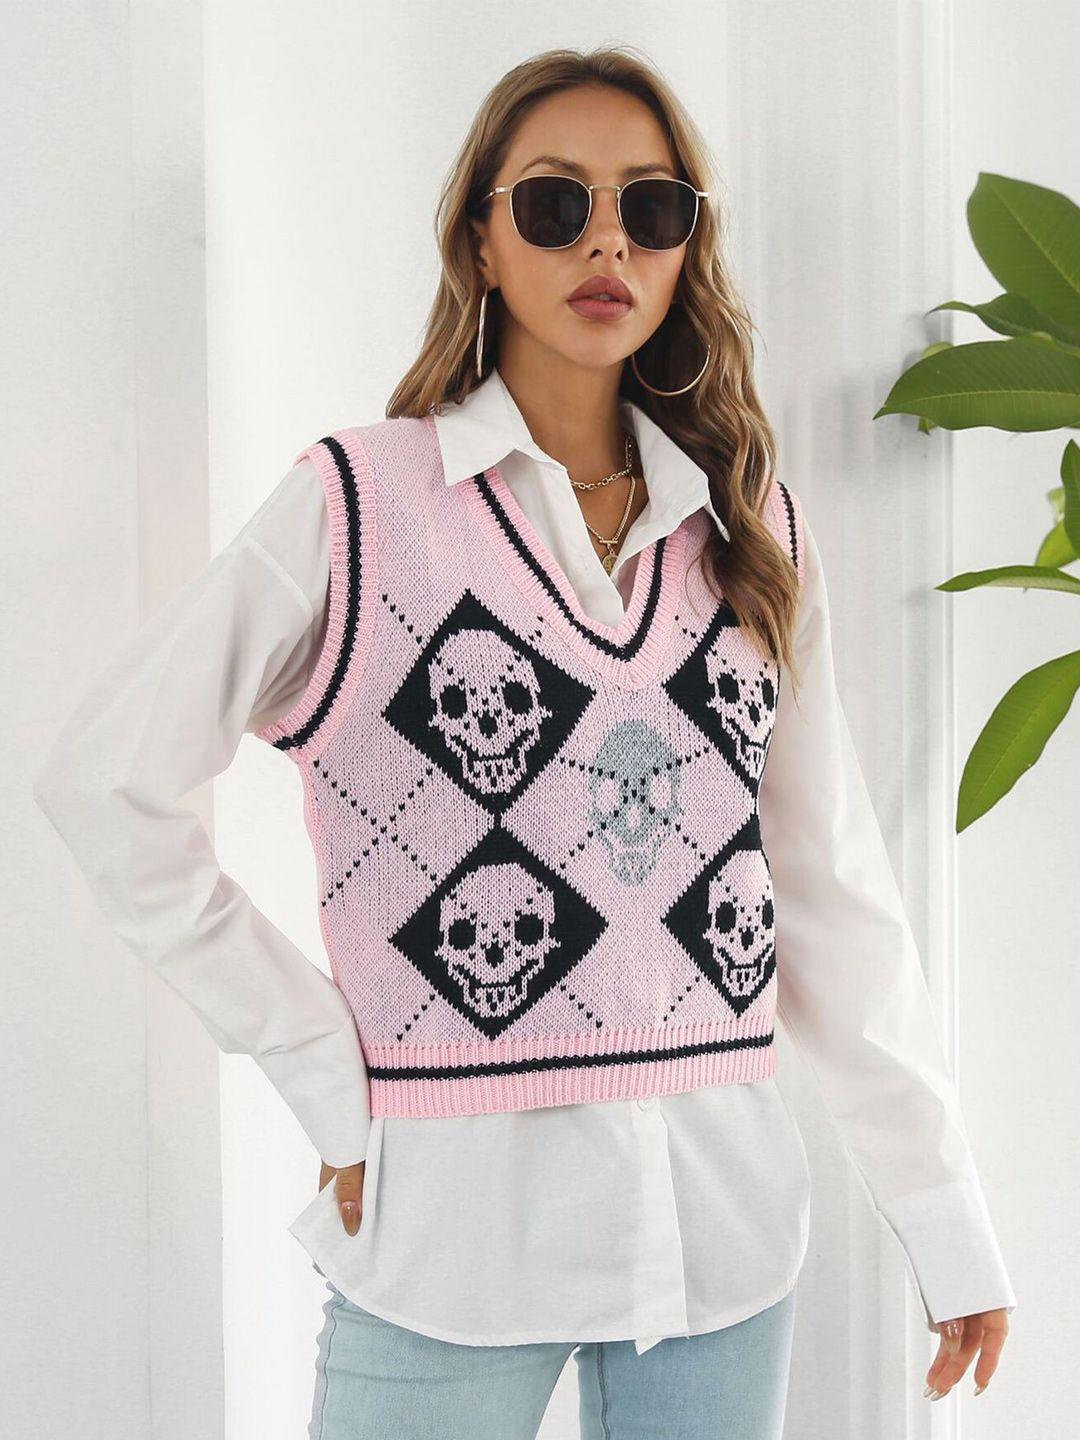 stylecast women pink & black printed sweater vest